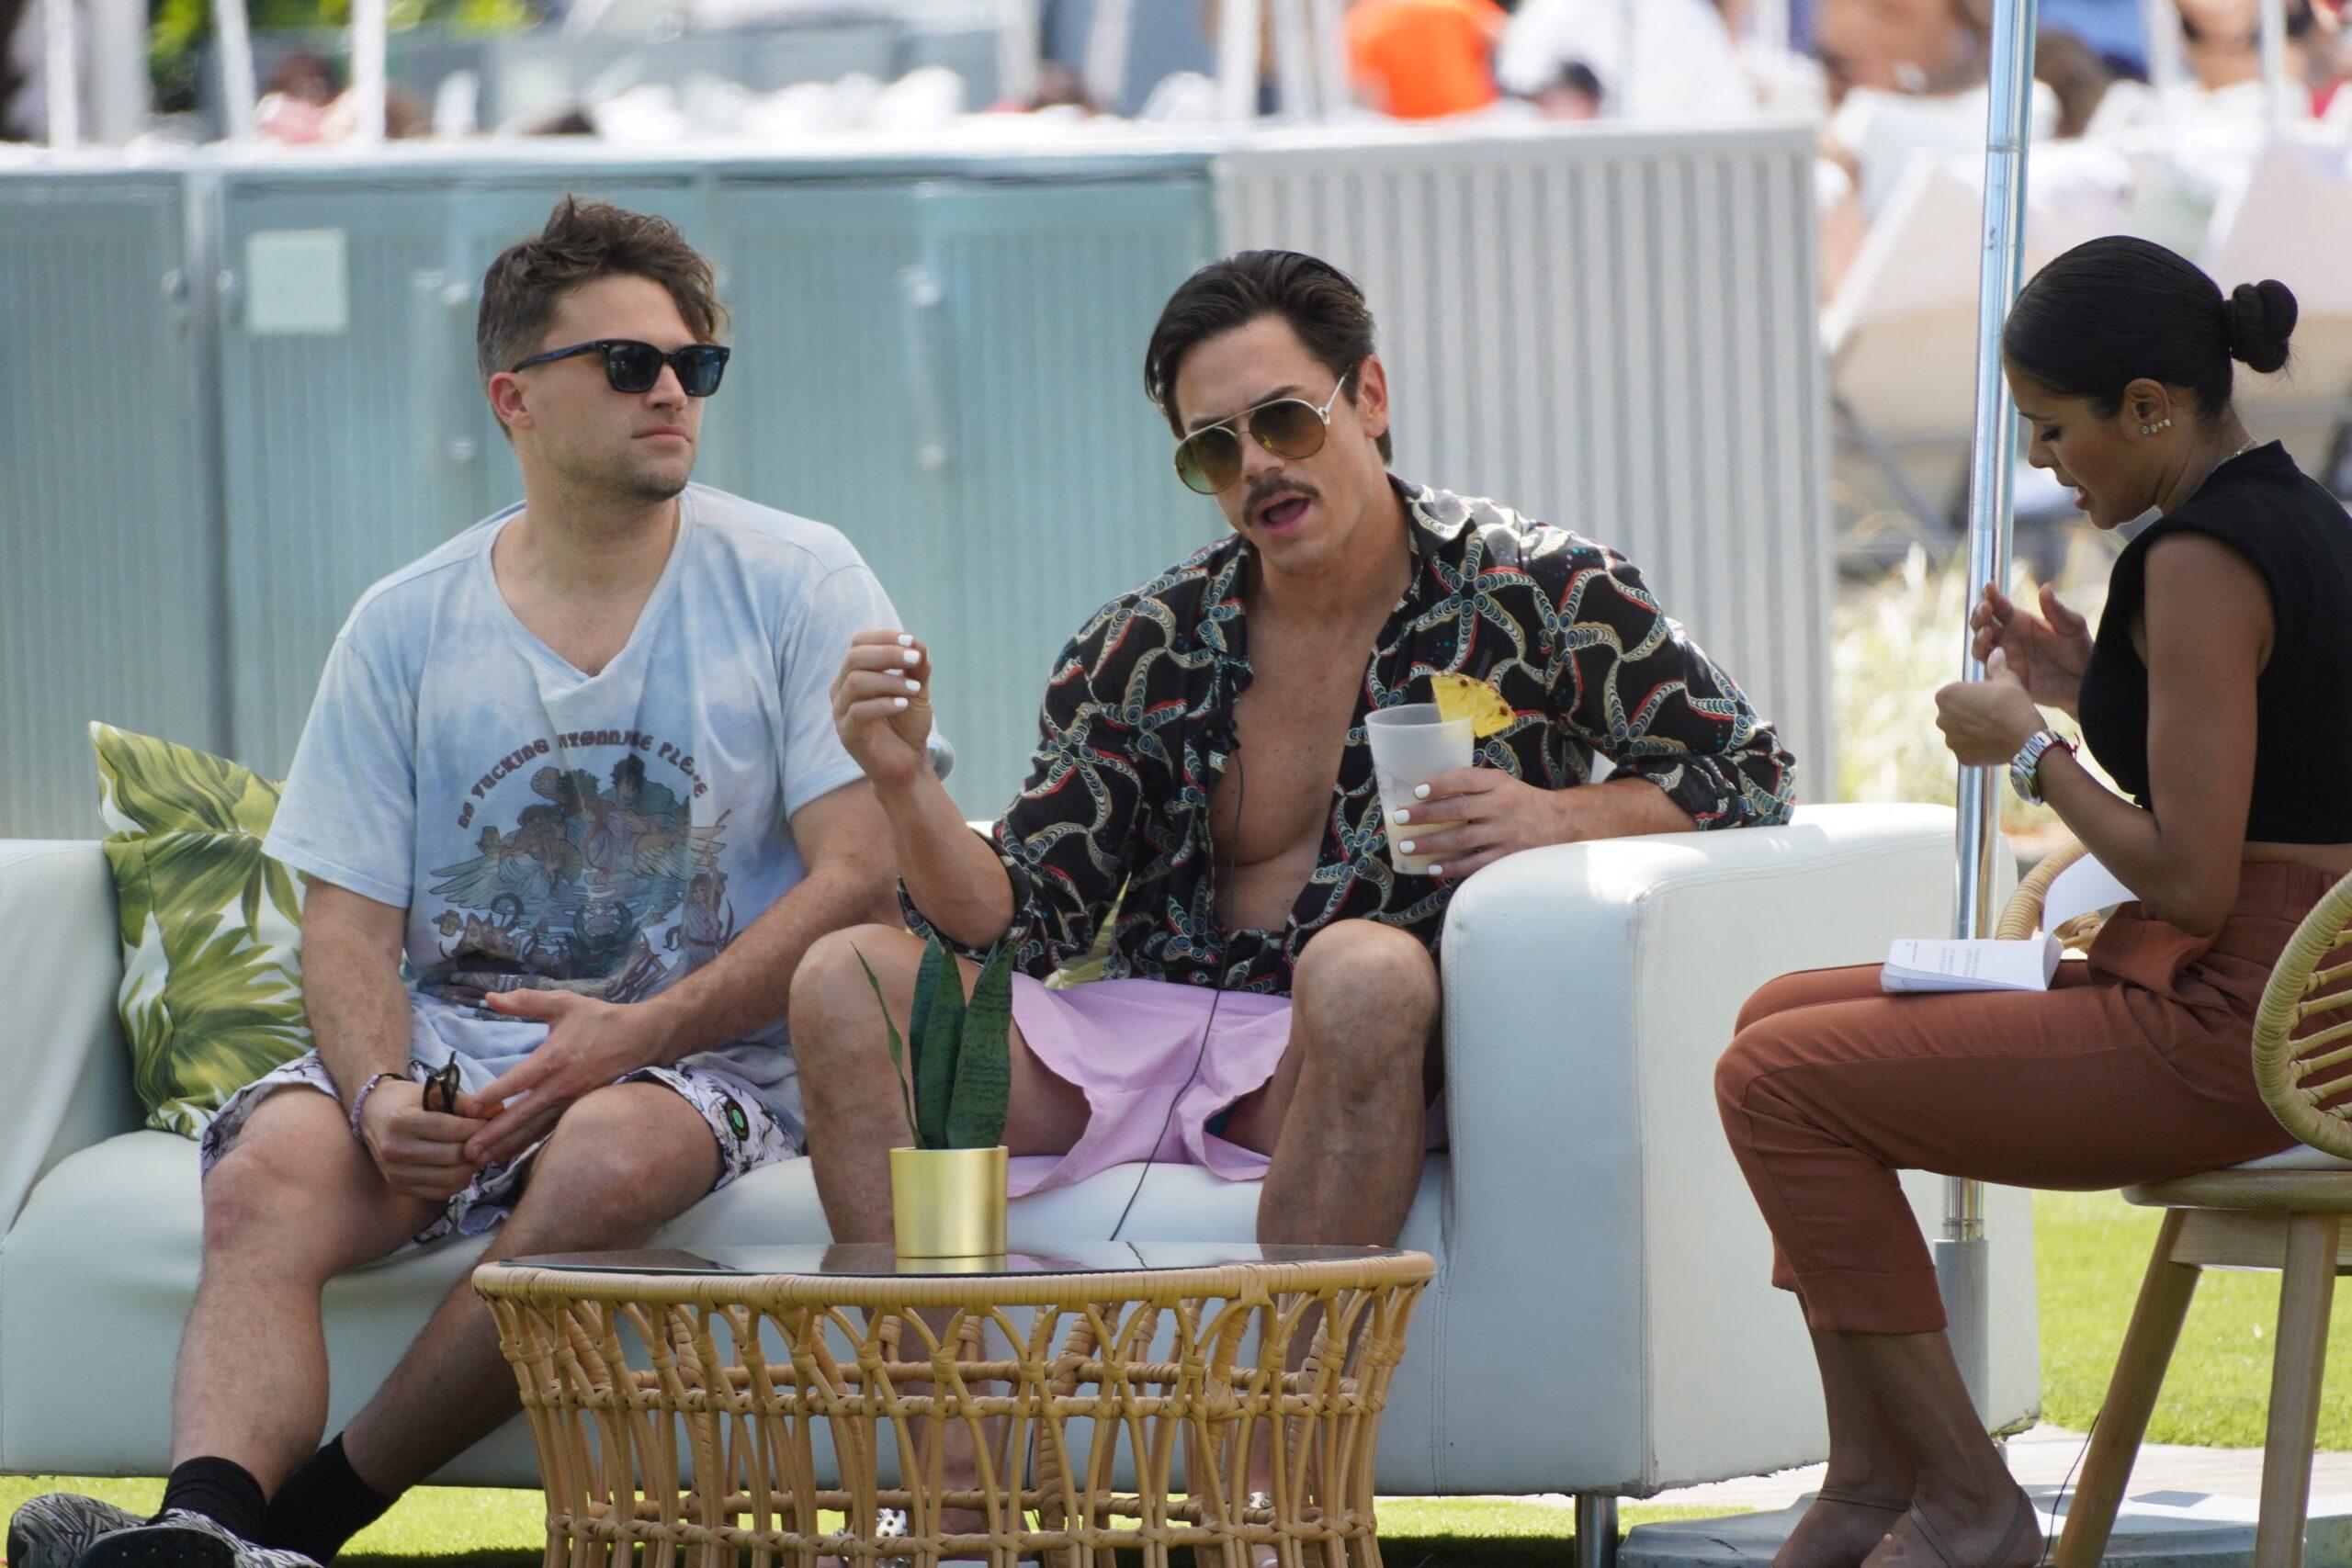 apos Vanderpump Rules apos star Tom Schwartz shrugs off his recent dating drama as he films in Miami Beach